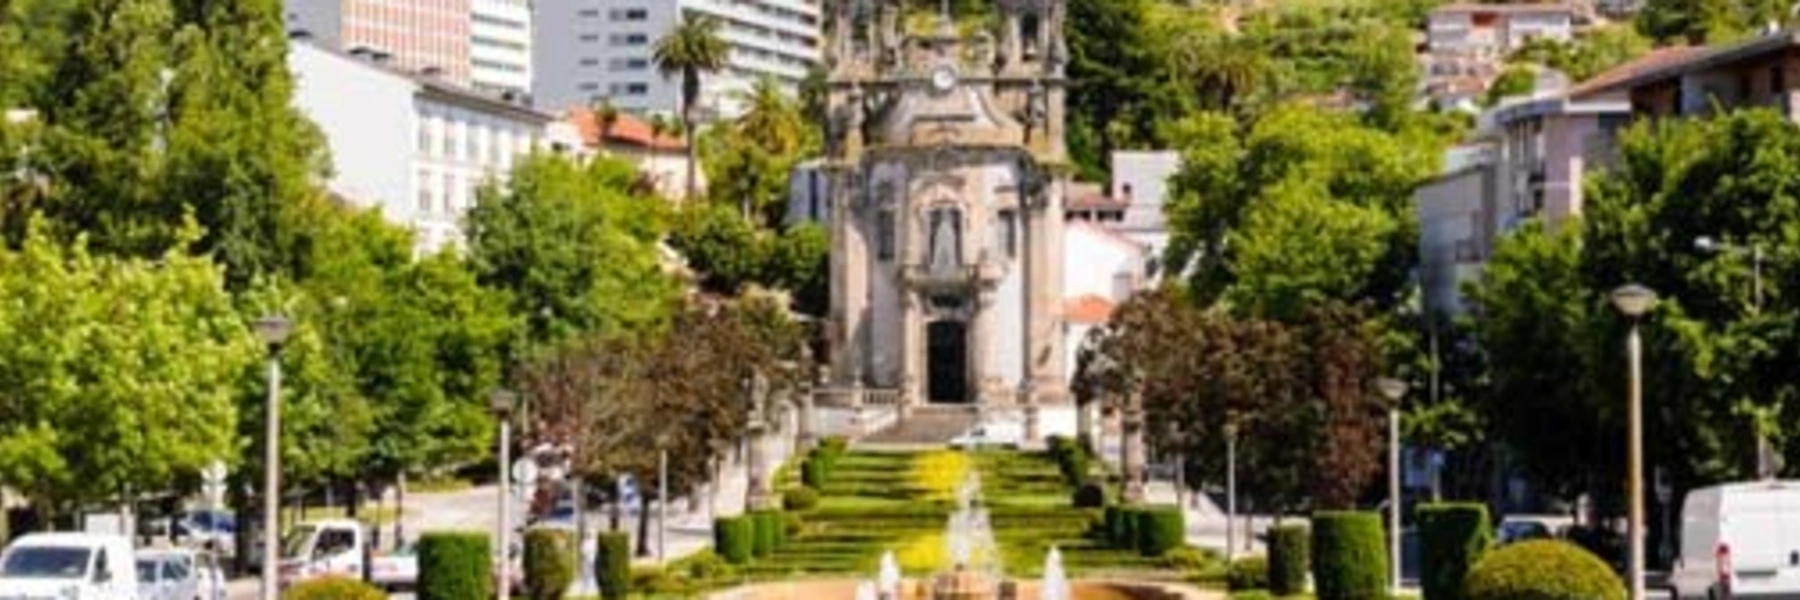 Guimaraes-Portugal